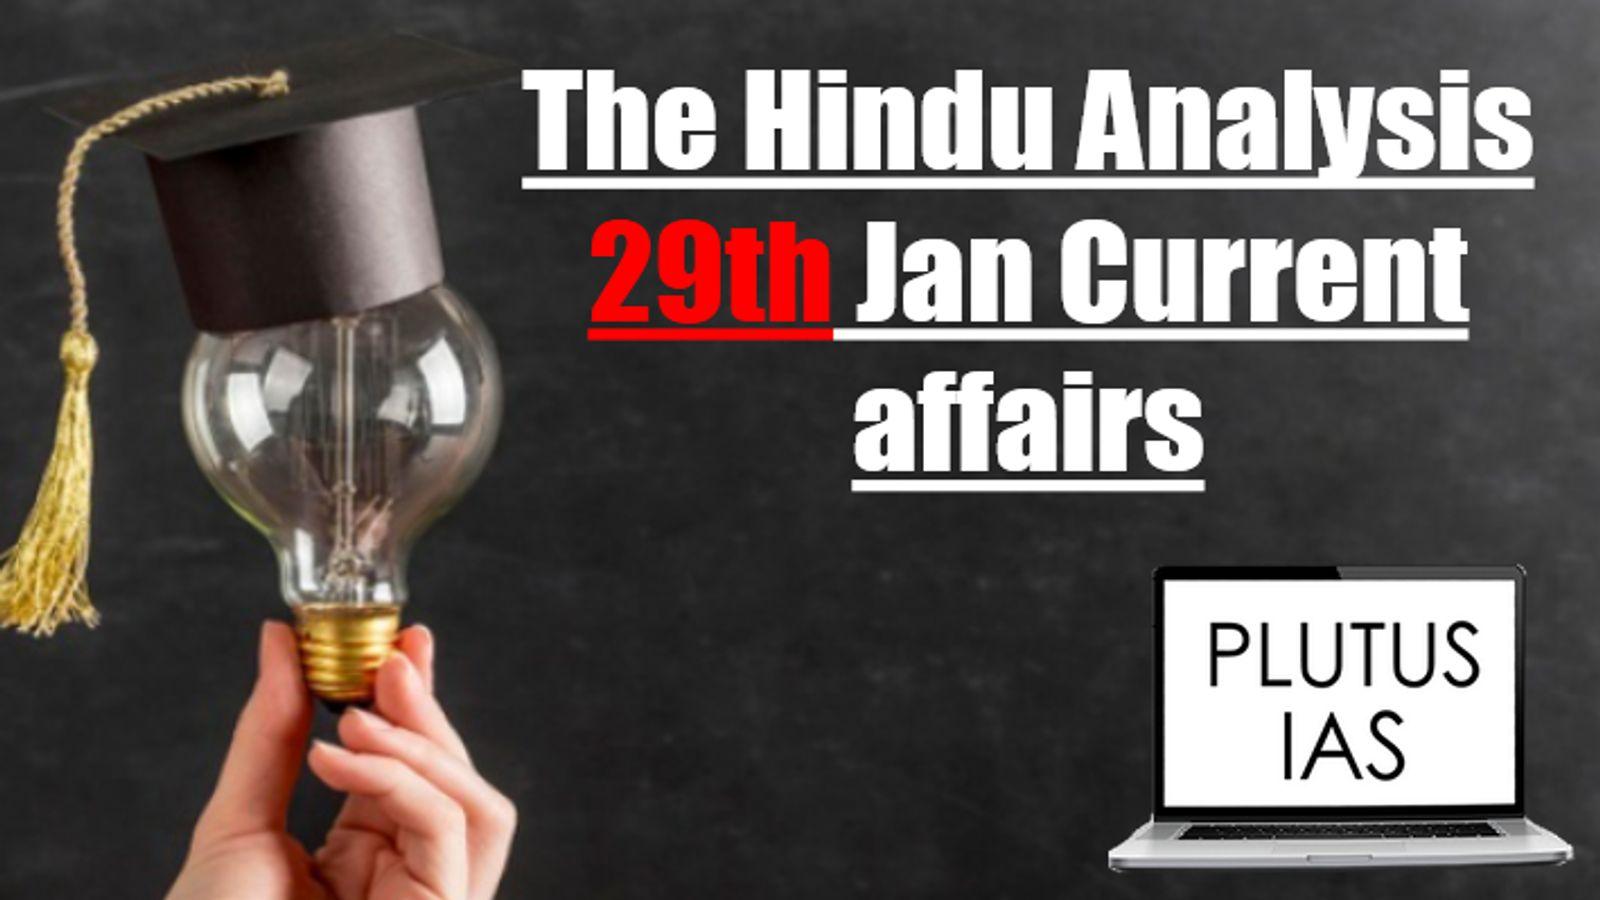 The Hindu Analysis 29th January